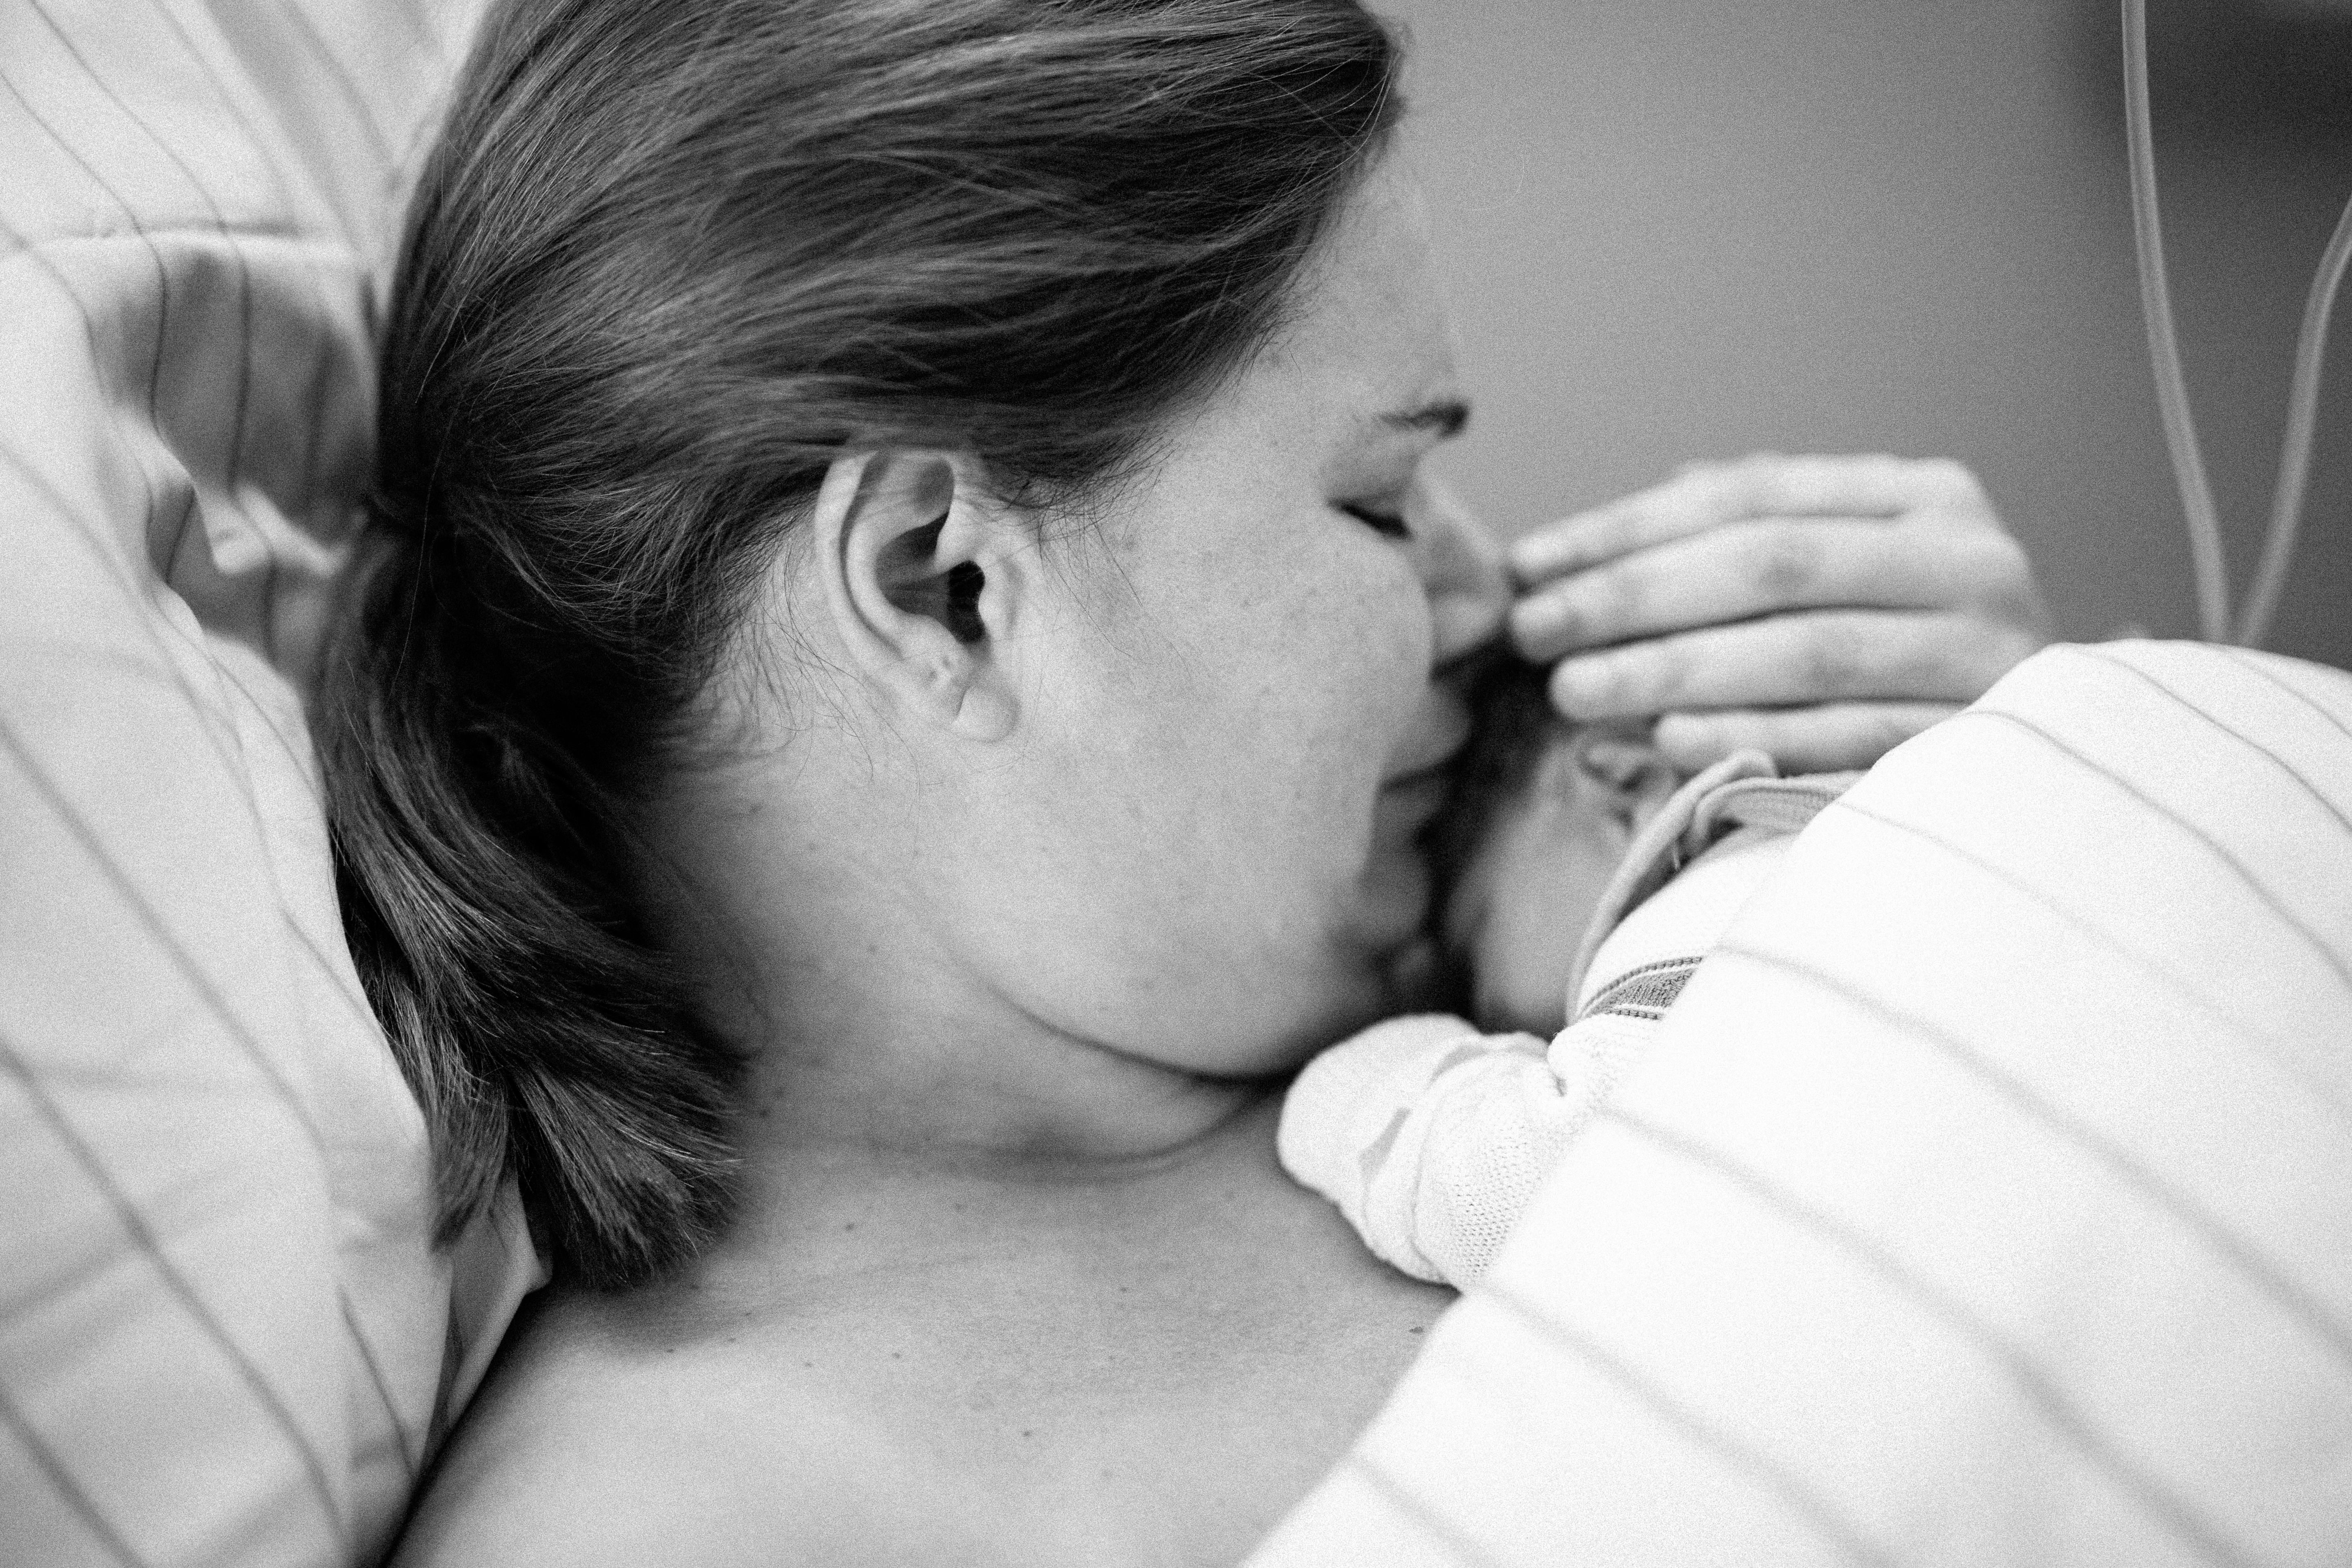 A mother kissing her newborn baby | Source: Shutterstock